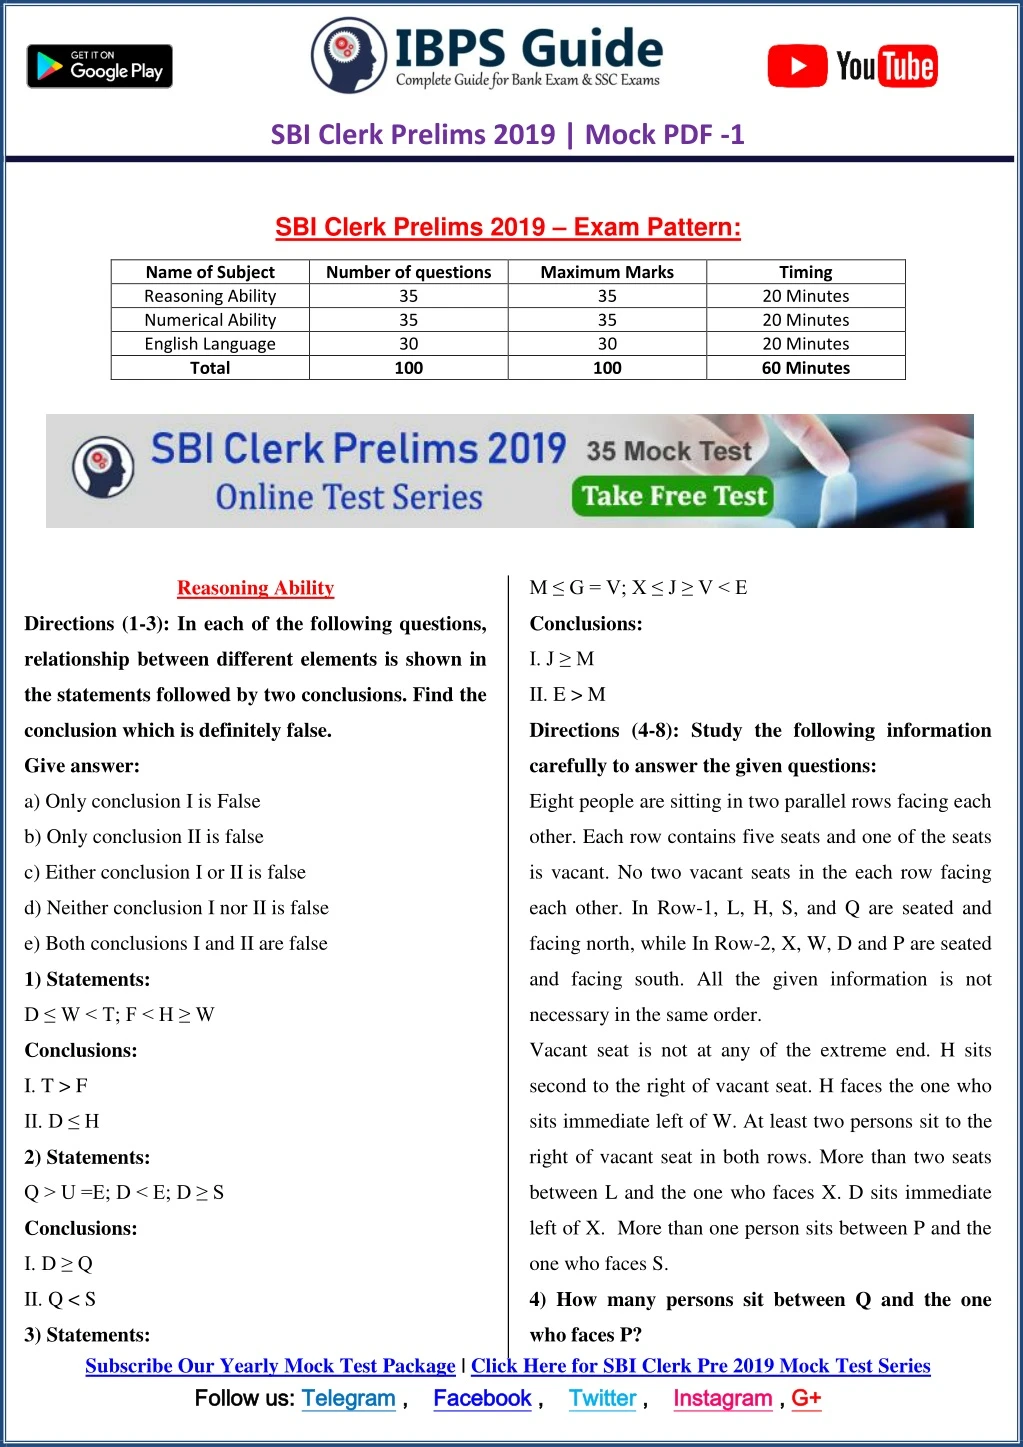 sbi clerk prelims 2019 mock pdf 1